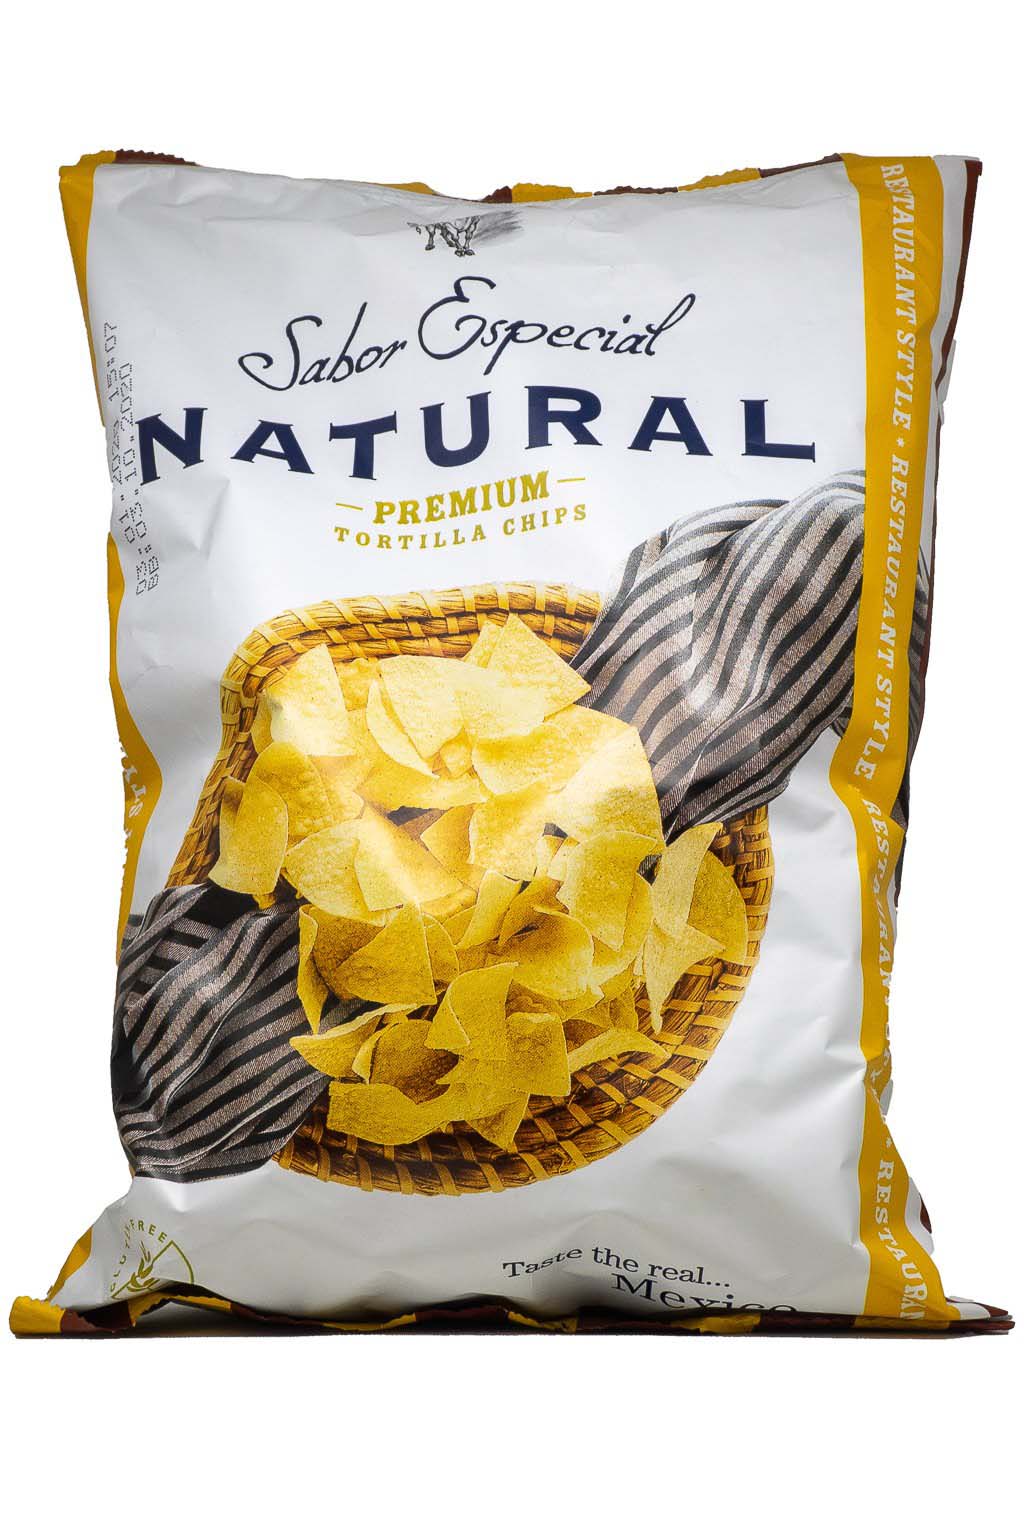 Sabor Especial tortilla chips naturel